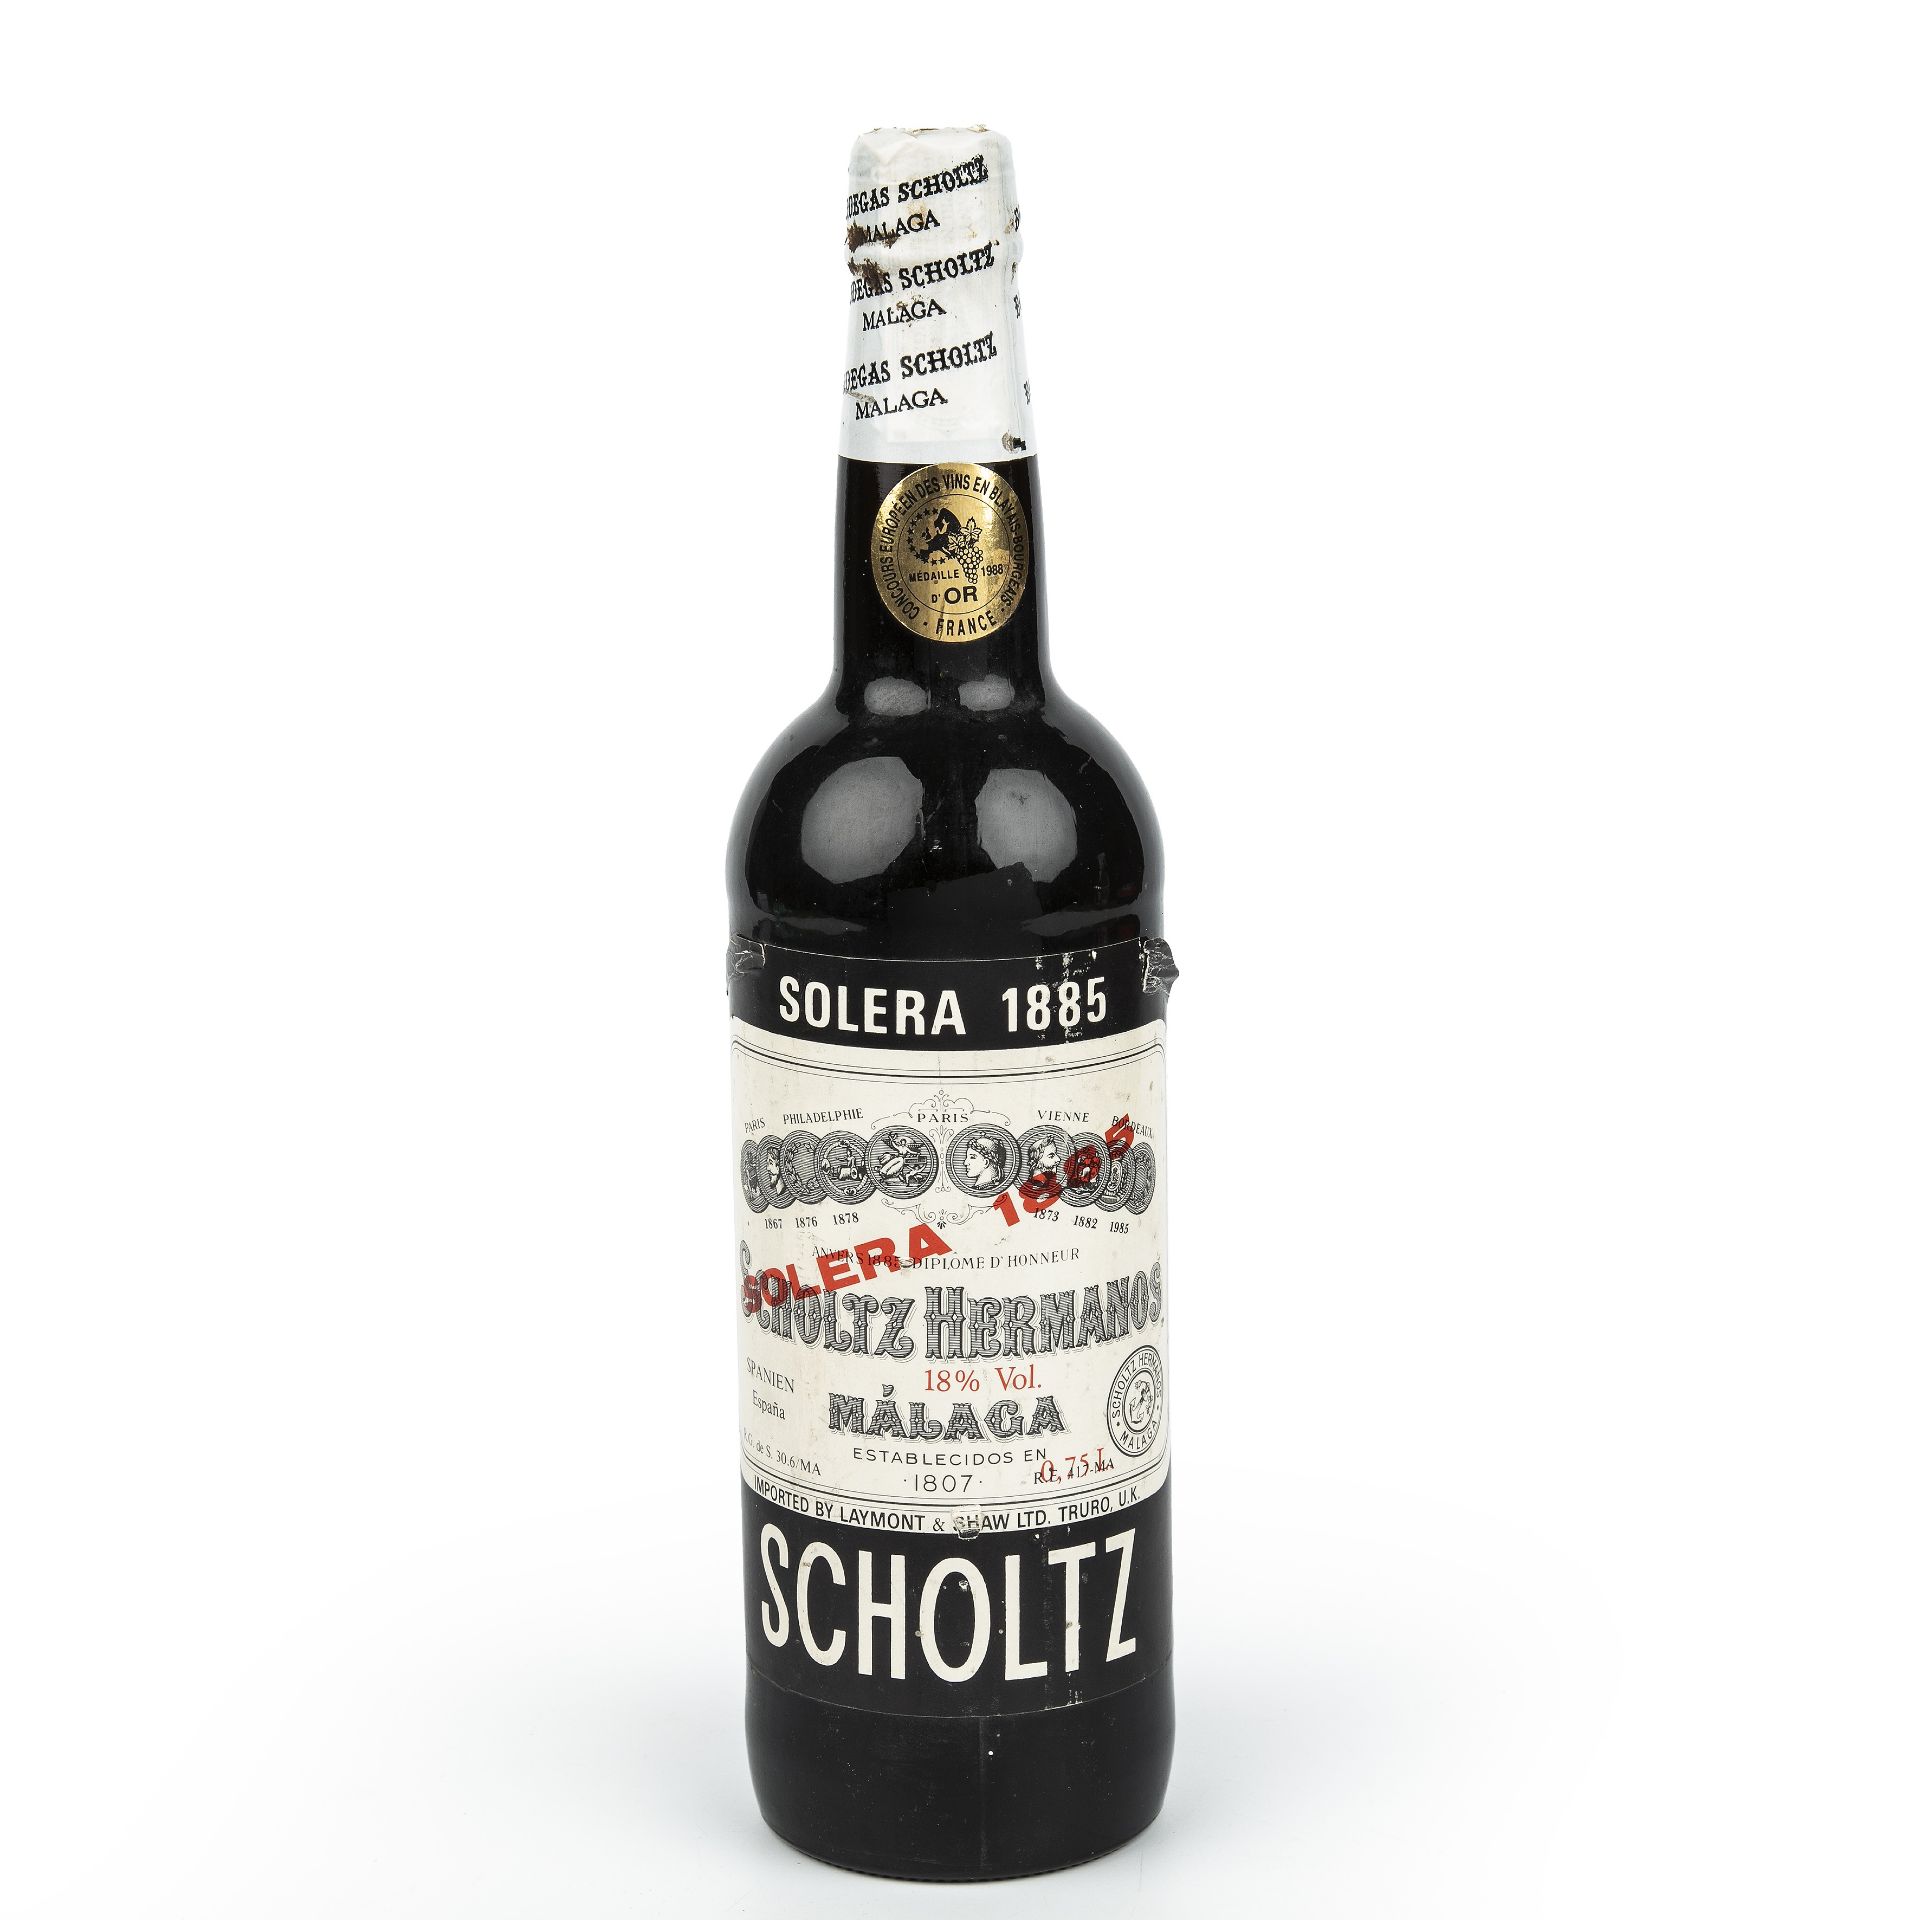 A bottle of Scholtz Hermanos Solera 1885 sherry Qty: 1